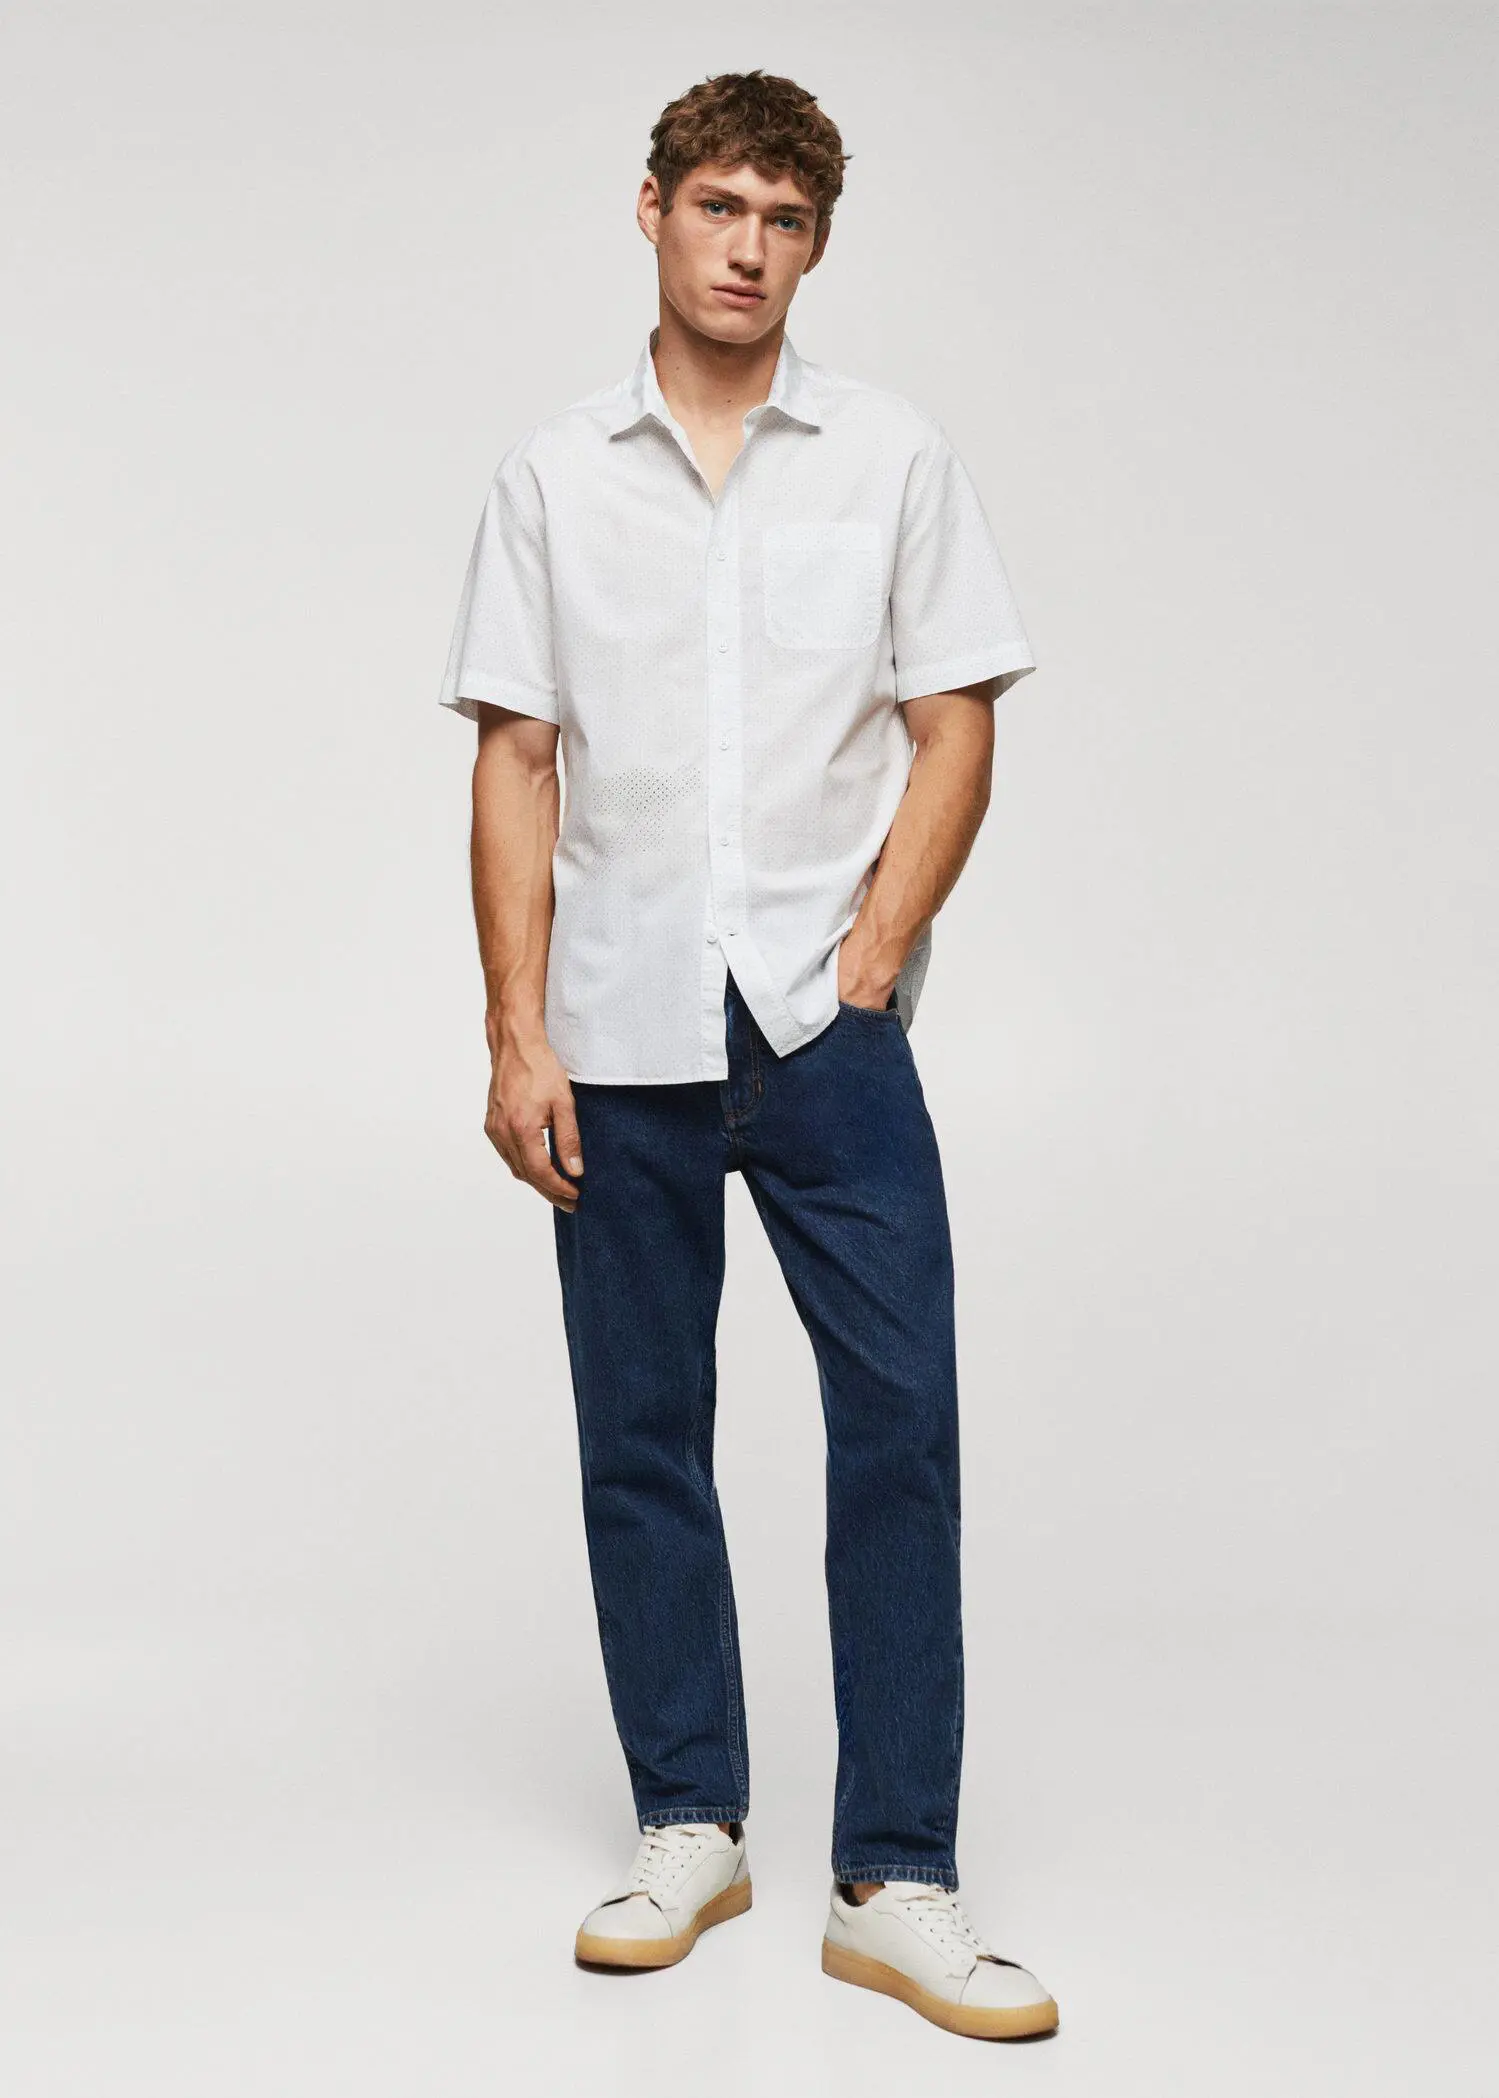 Mango 100% cotton short-sleeved mirco-patterned shirt. 2